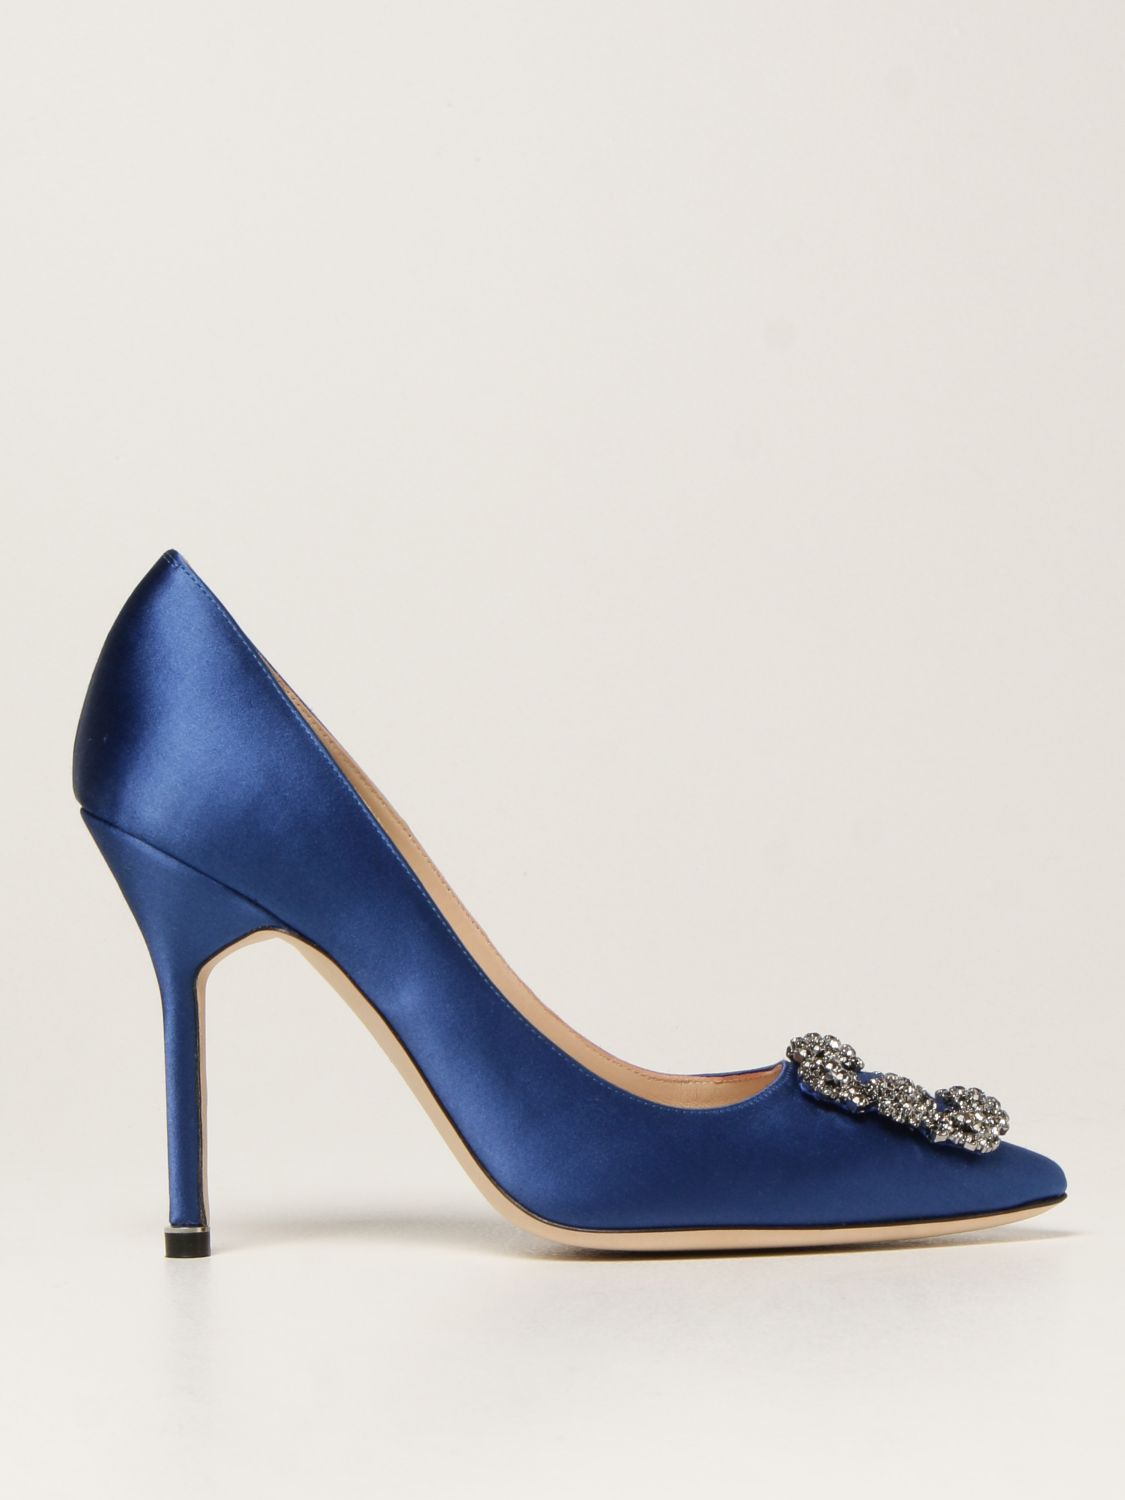 Escarpins Manolo Blahnik: Chaussures femme Manolo Blahnik bleu royal 1